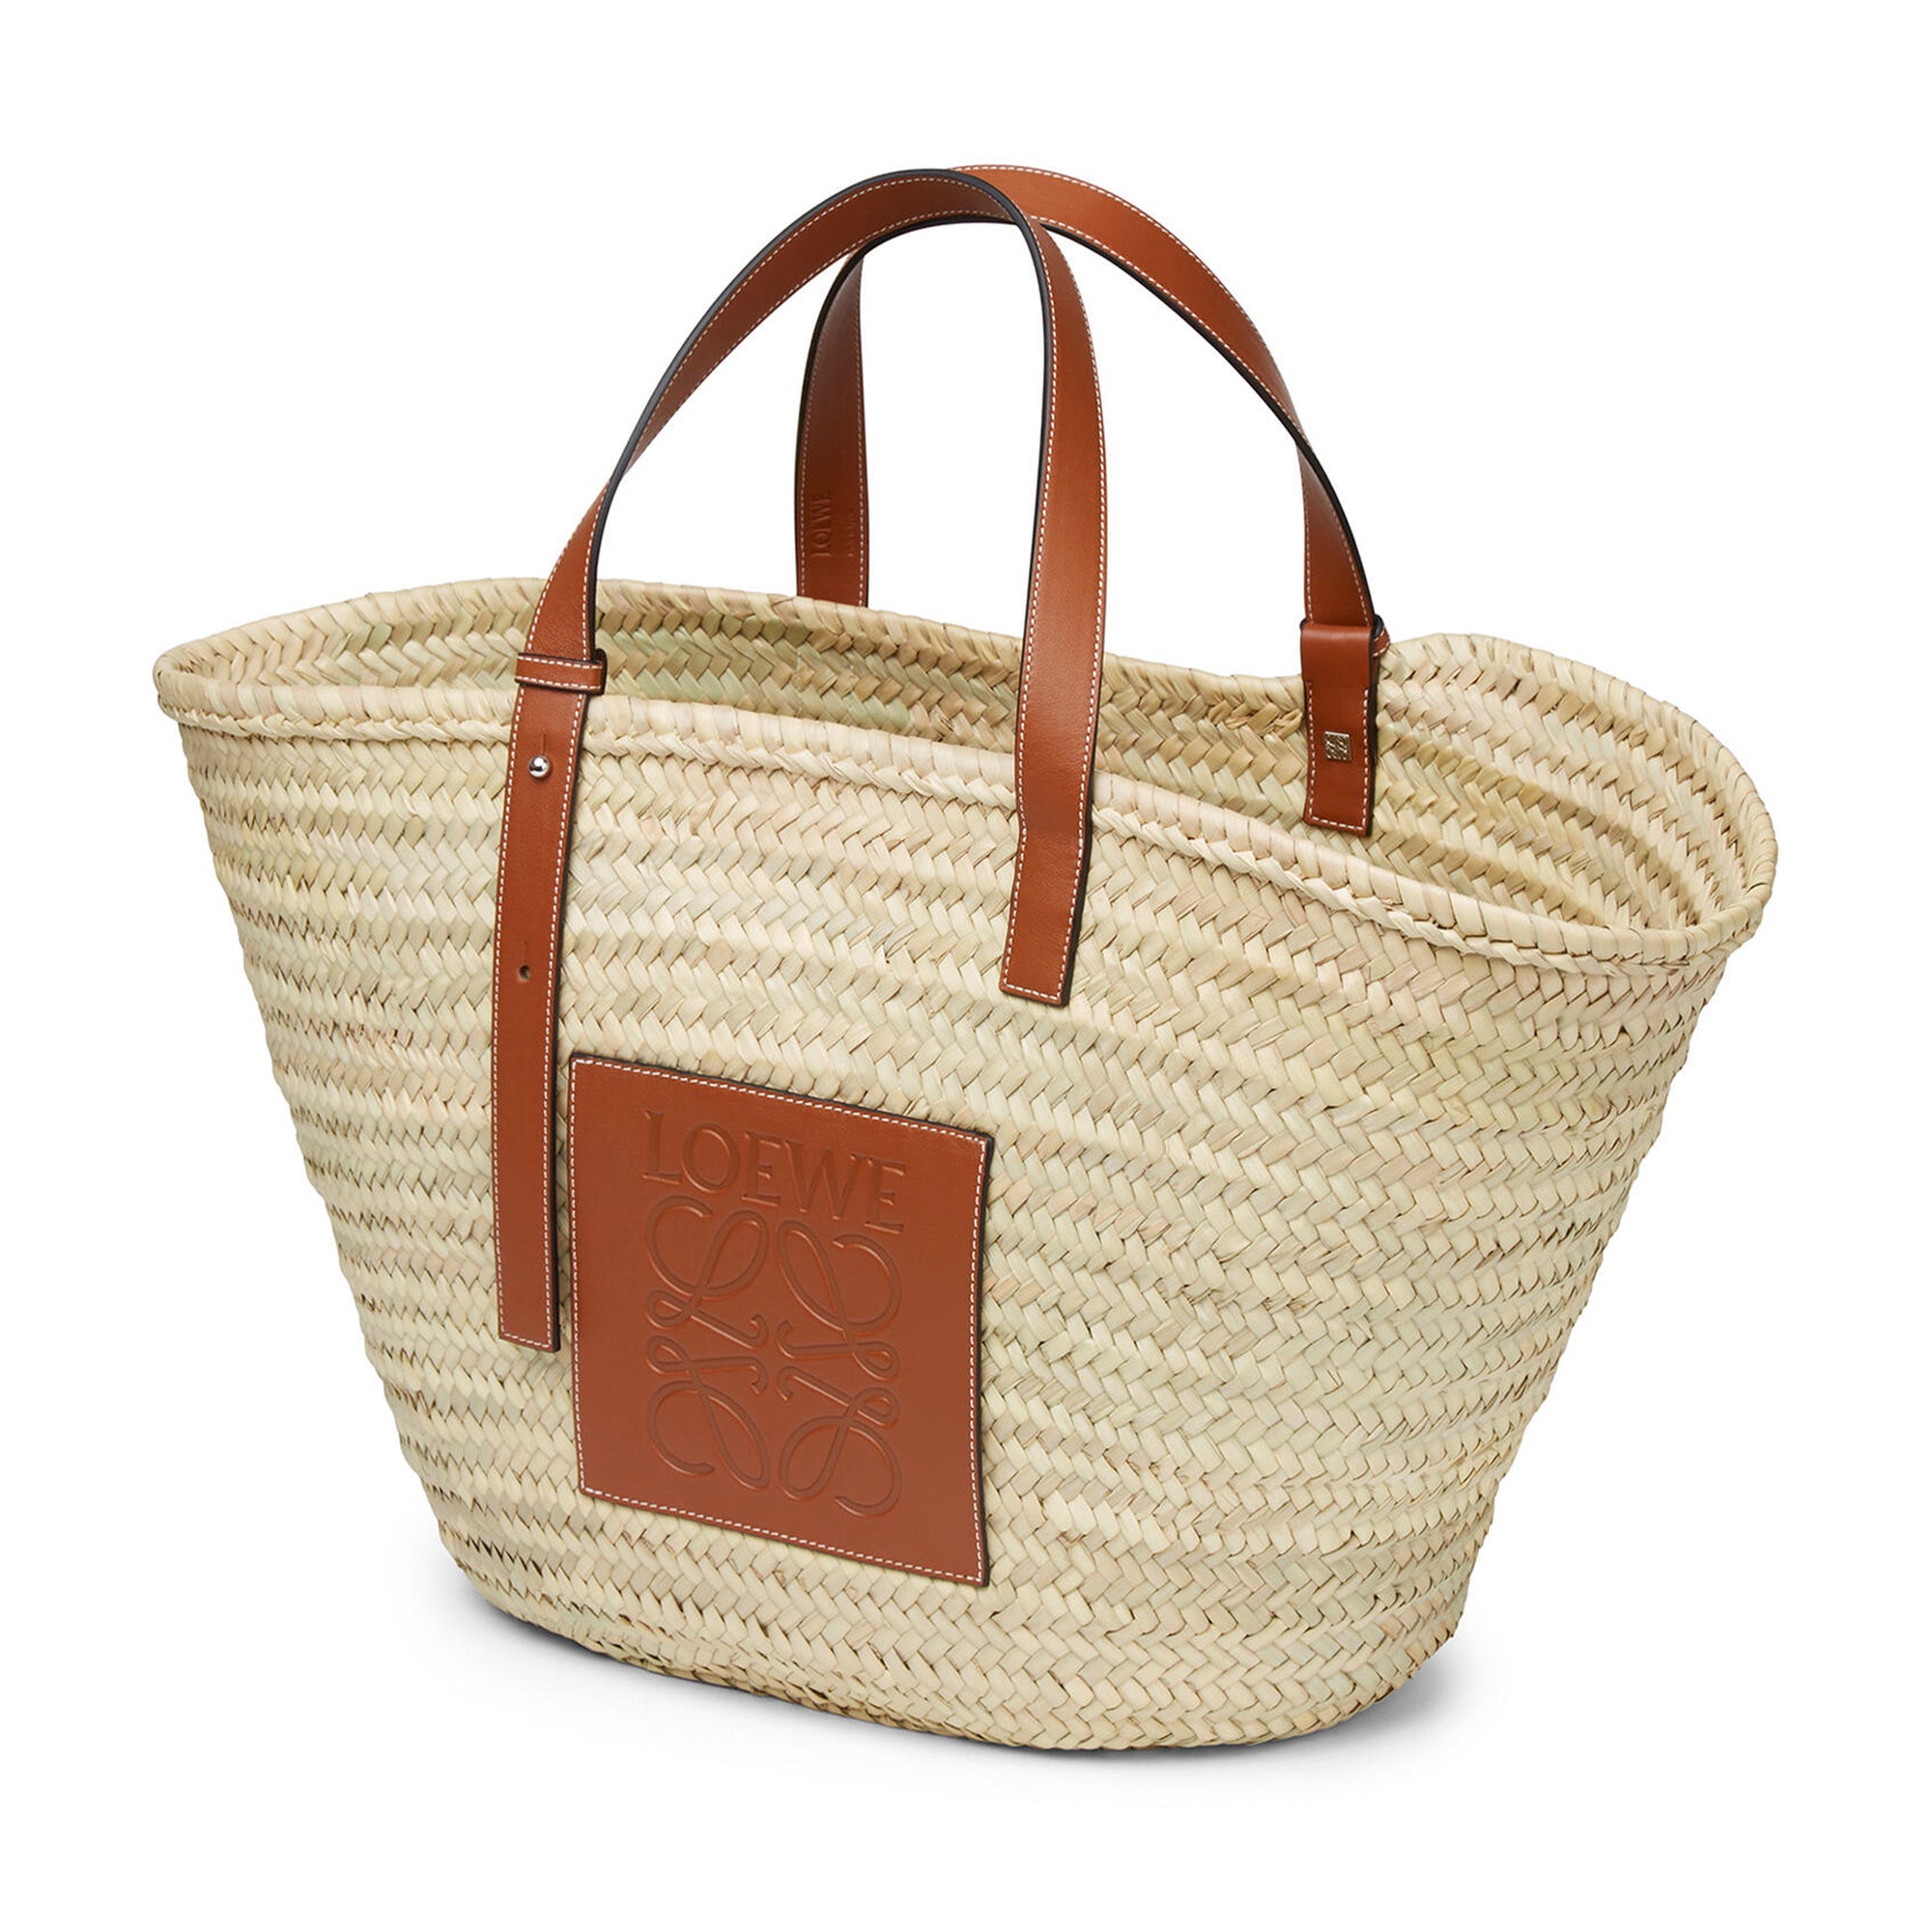 Loewe - Women’s Basket Large Bag - (Natural/Tan) view 2